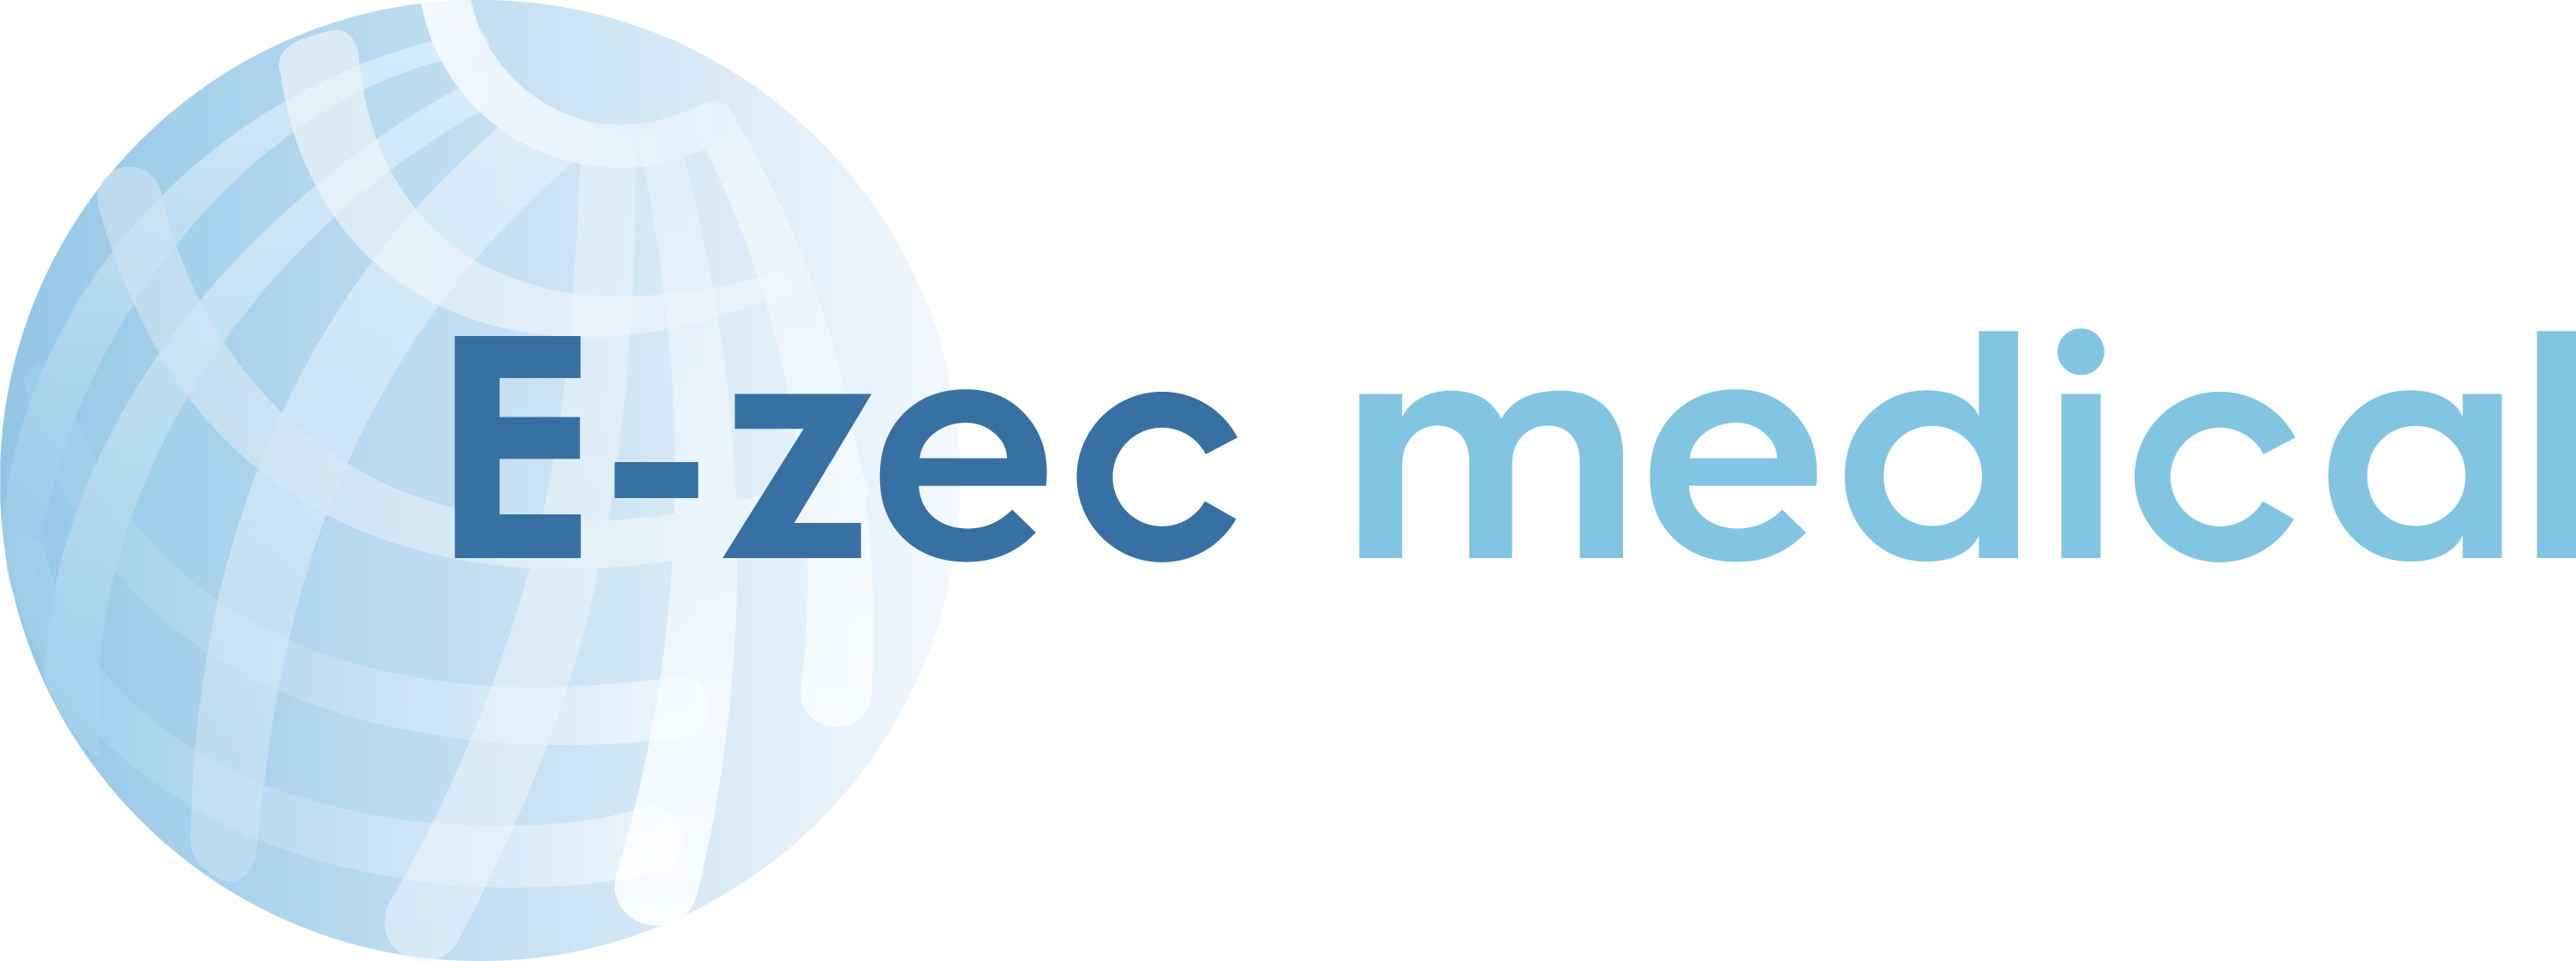 E Zec Medical high res